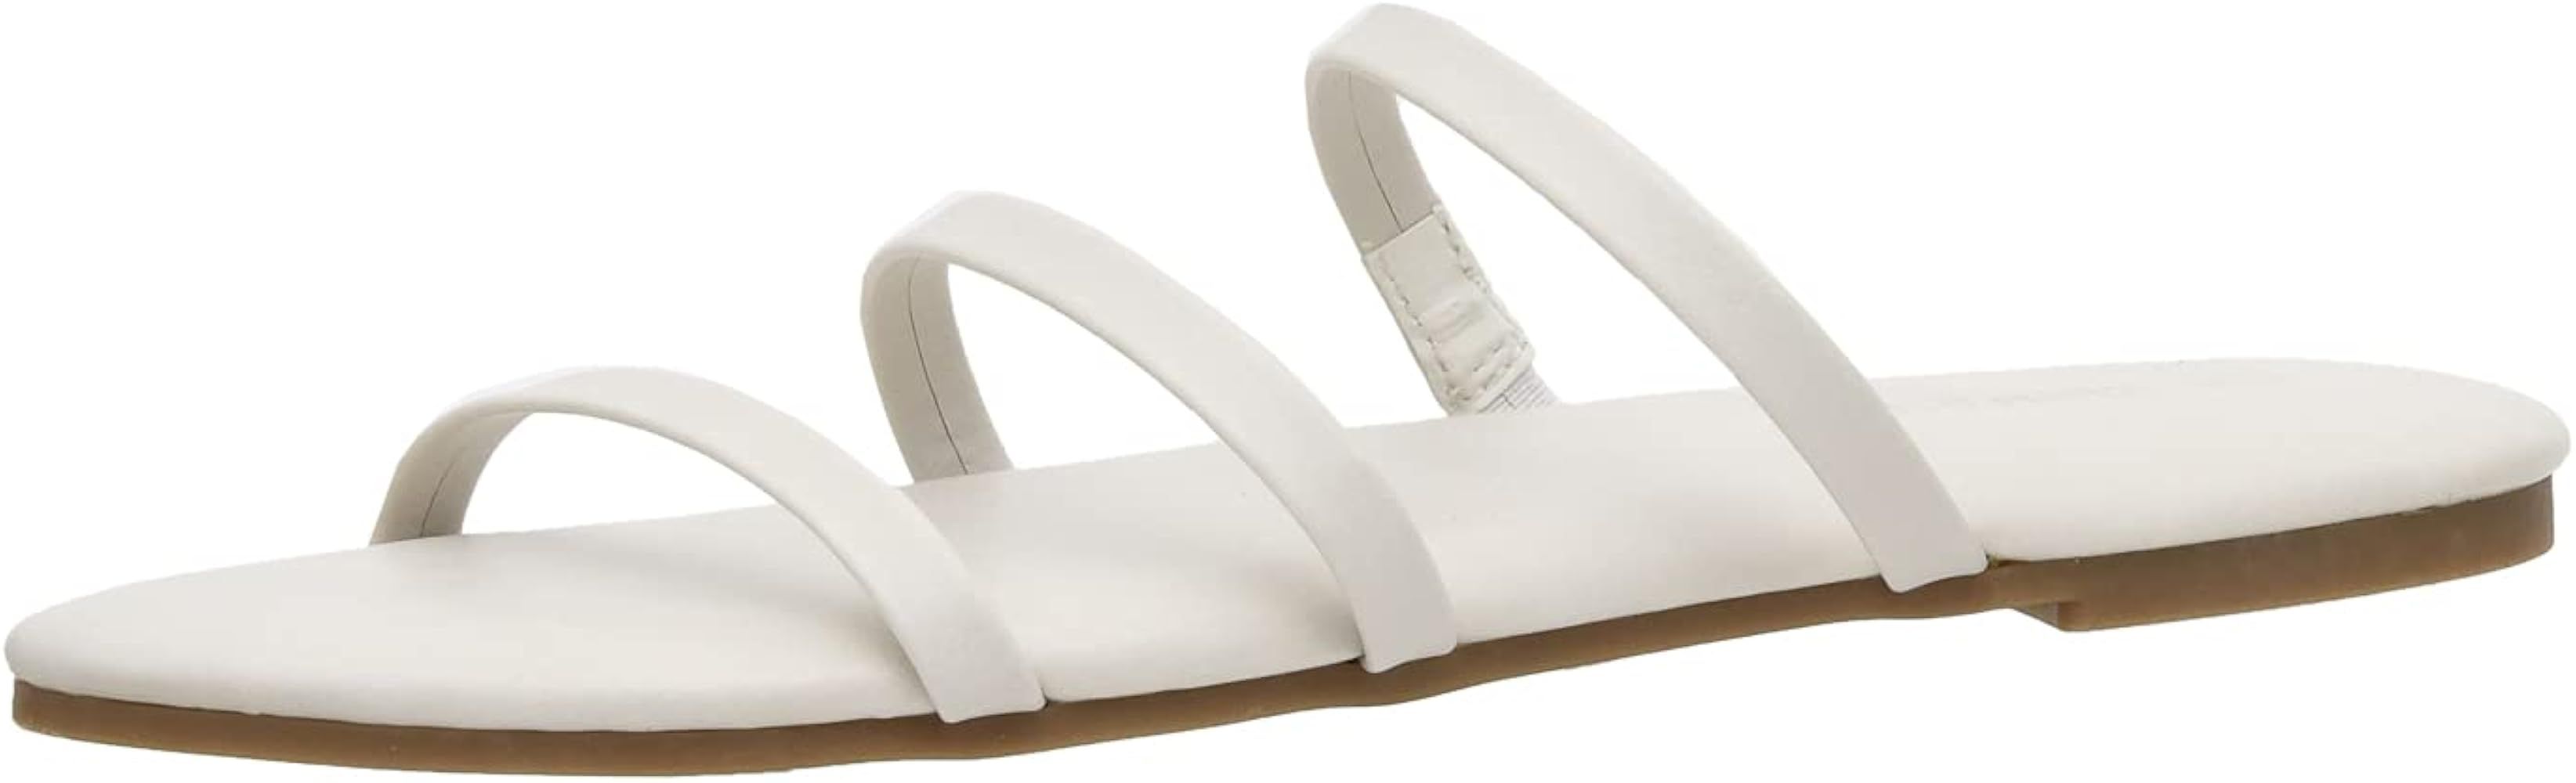 CUSHIONAIRE Women's Capri slide Flip Flop Sandal with Memory Foam | Amazon (US)